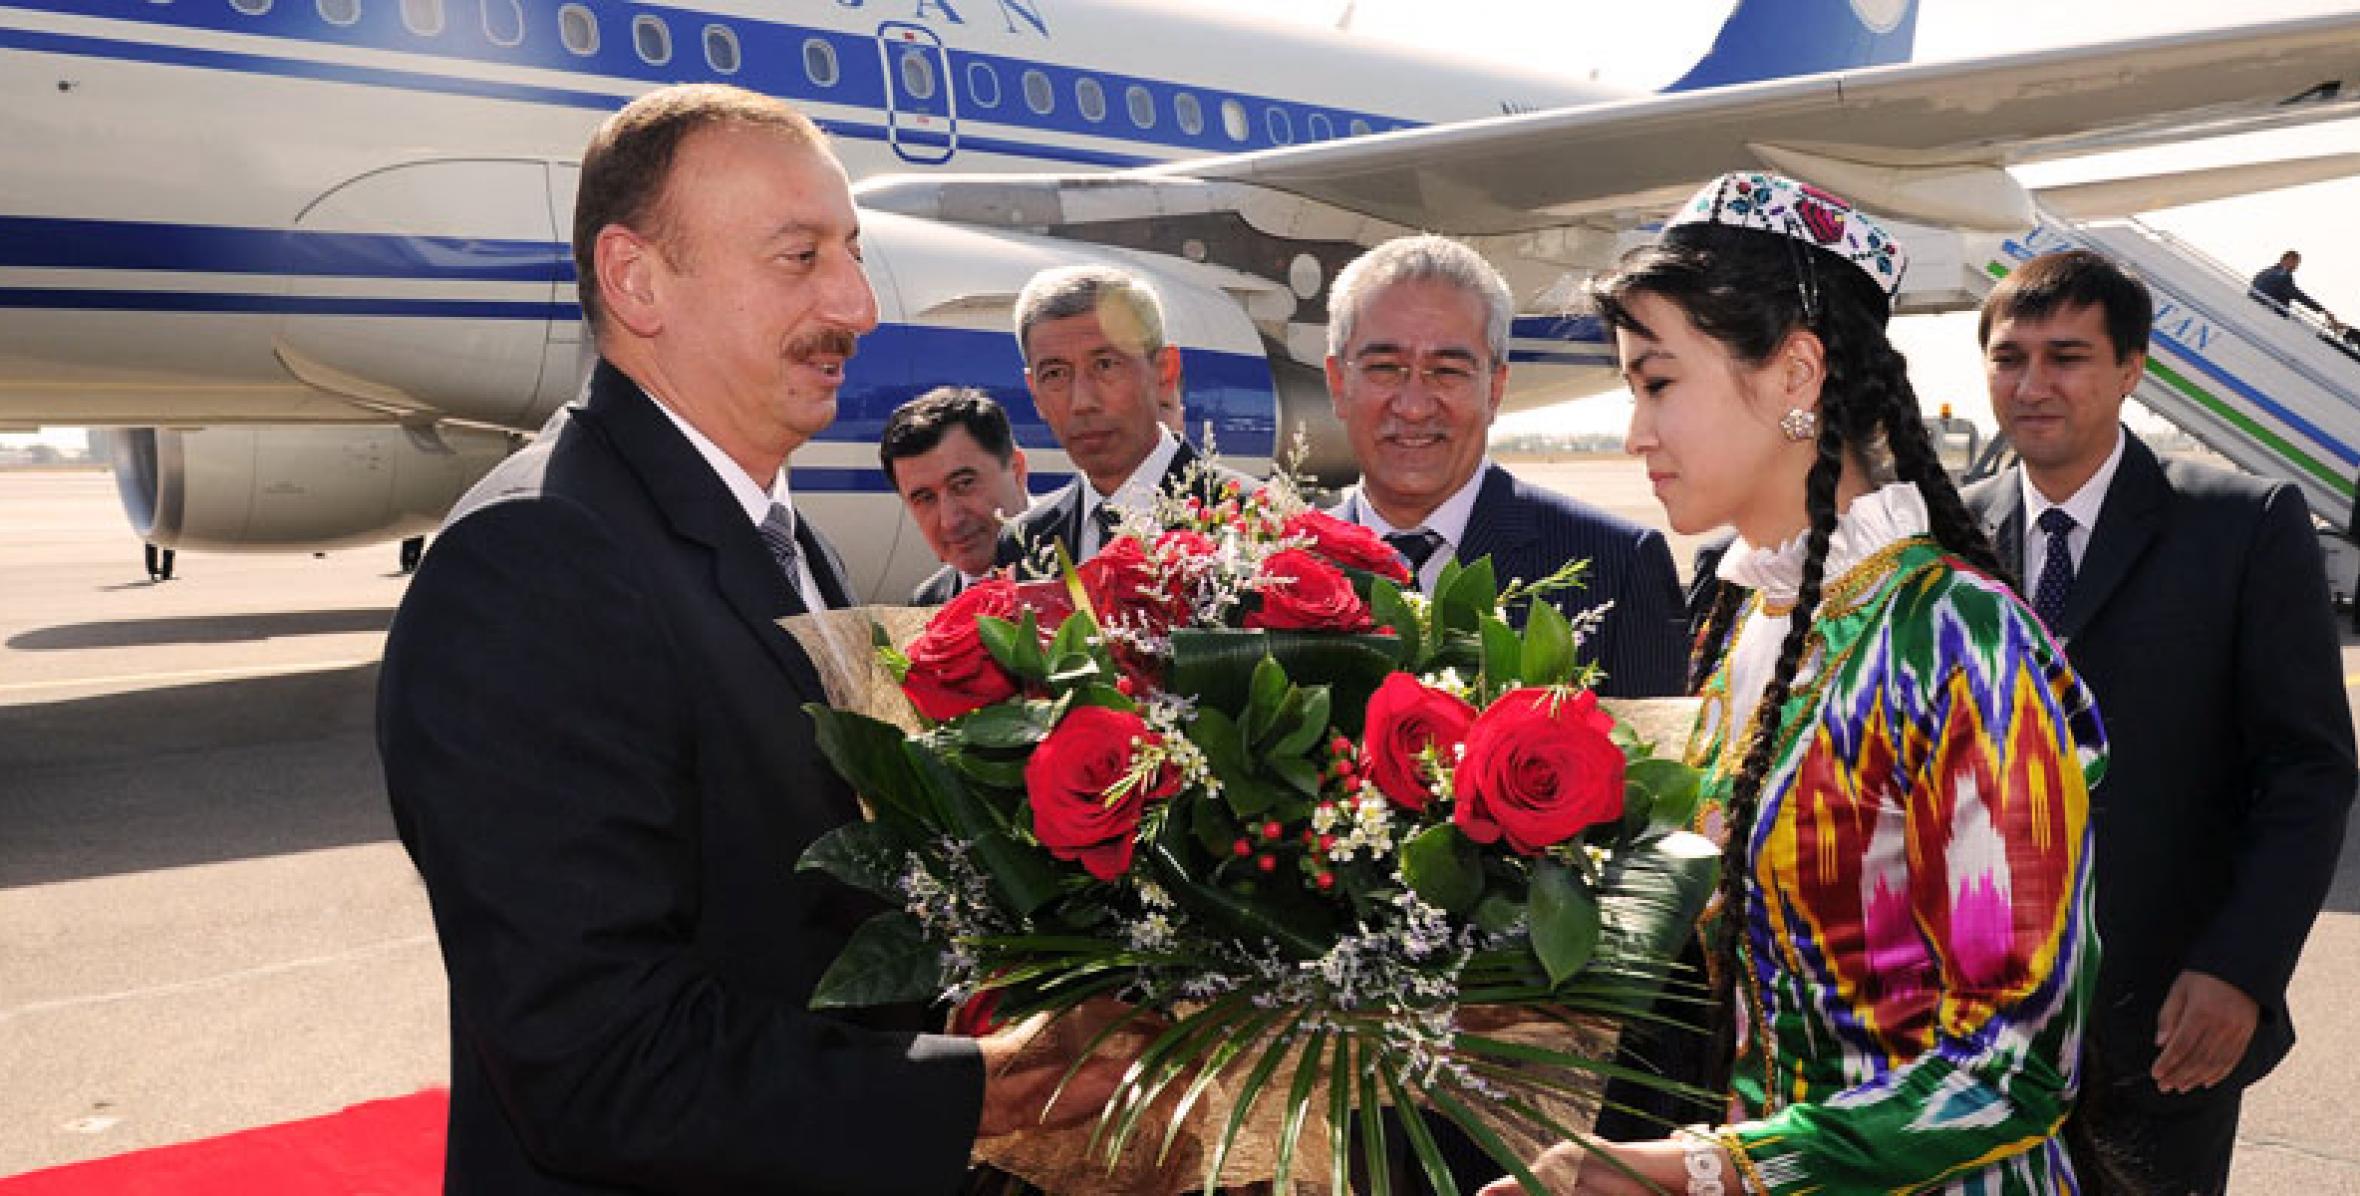 Ilham Aliyev left for an official visit to Uzbekistan